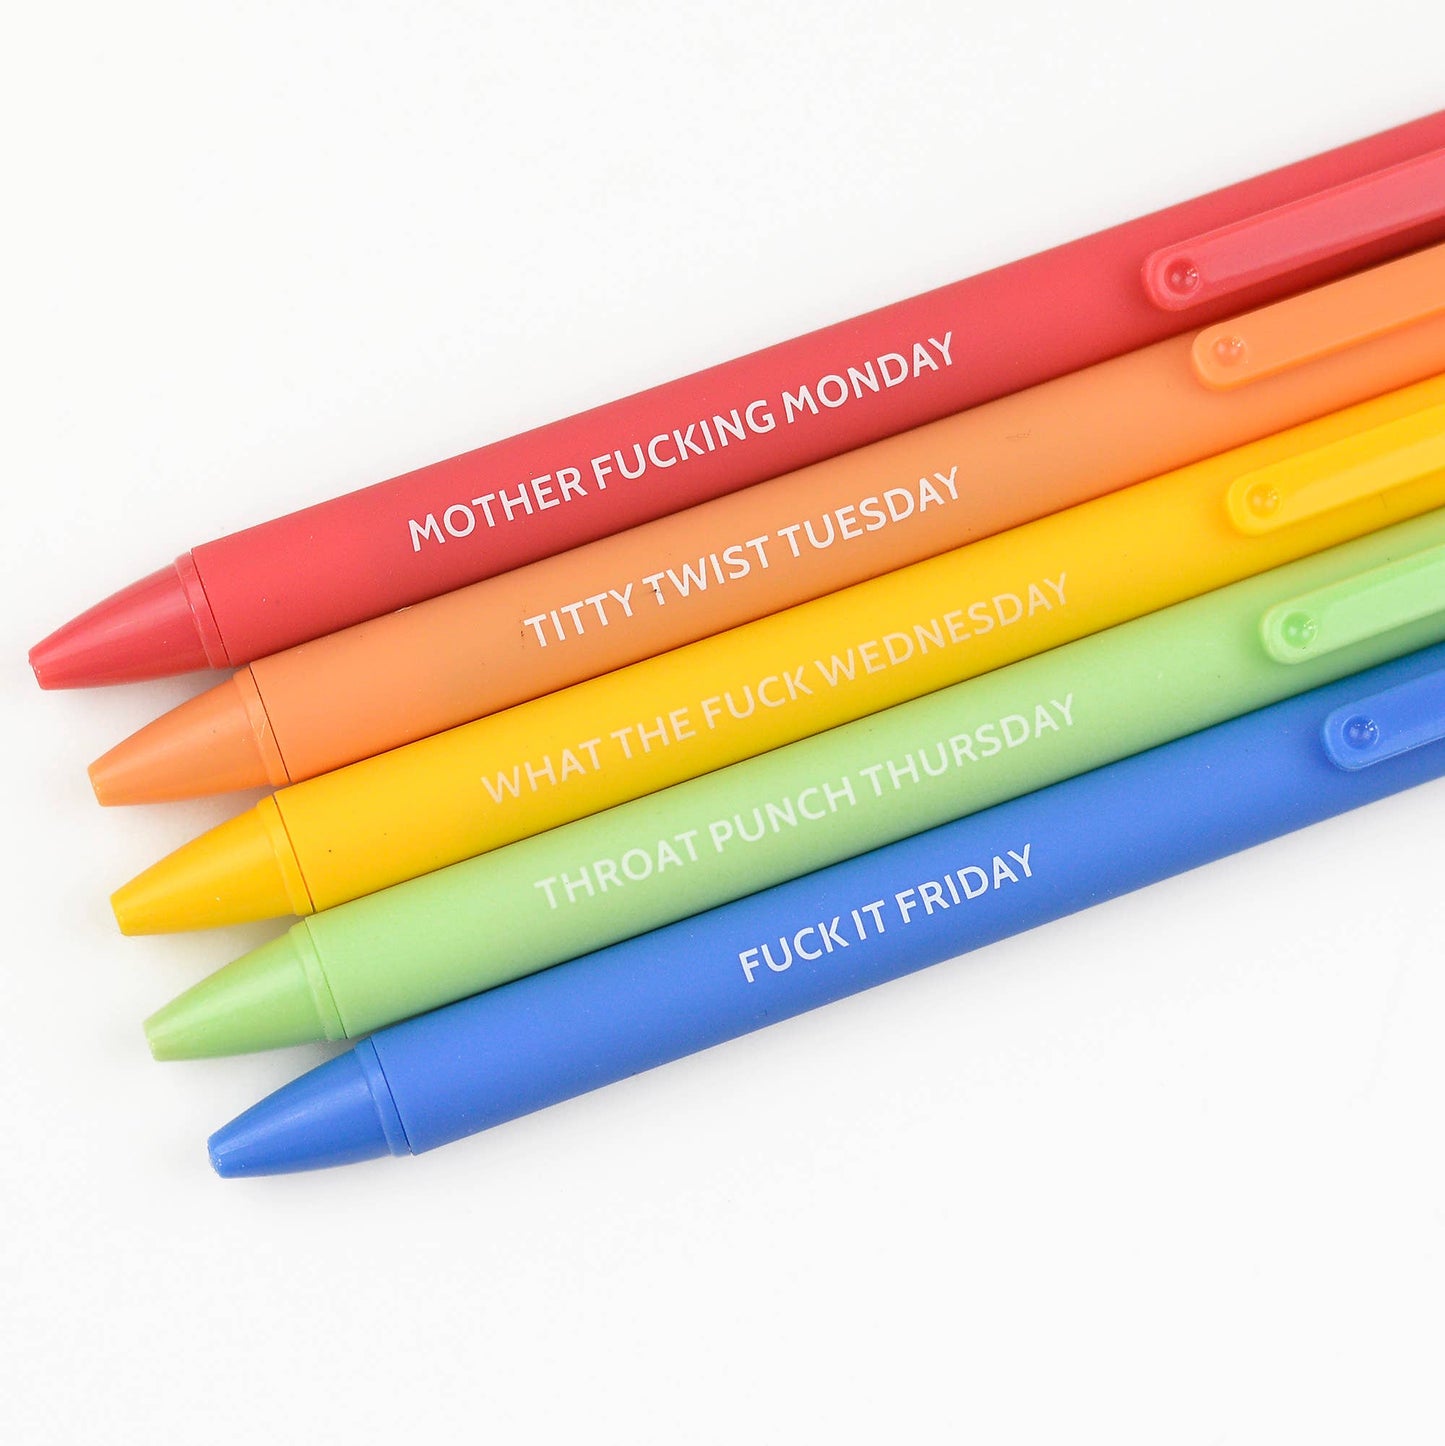 Mugsby - Compliments Pen Set Edition, Pens, Pen Set, Funny Pens